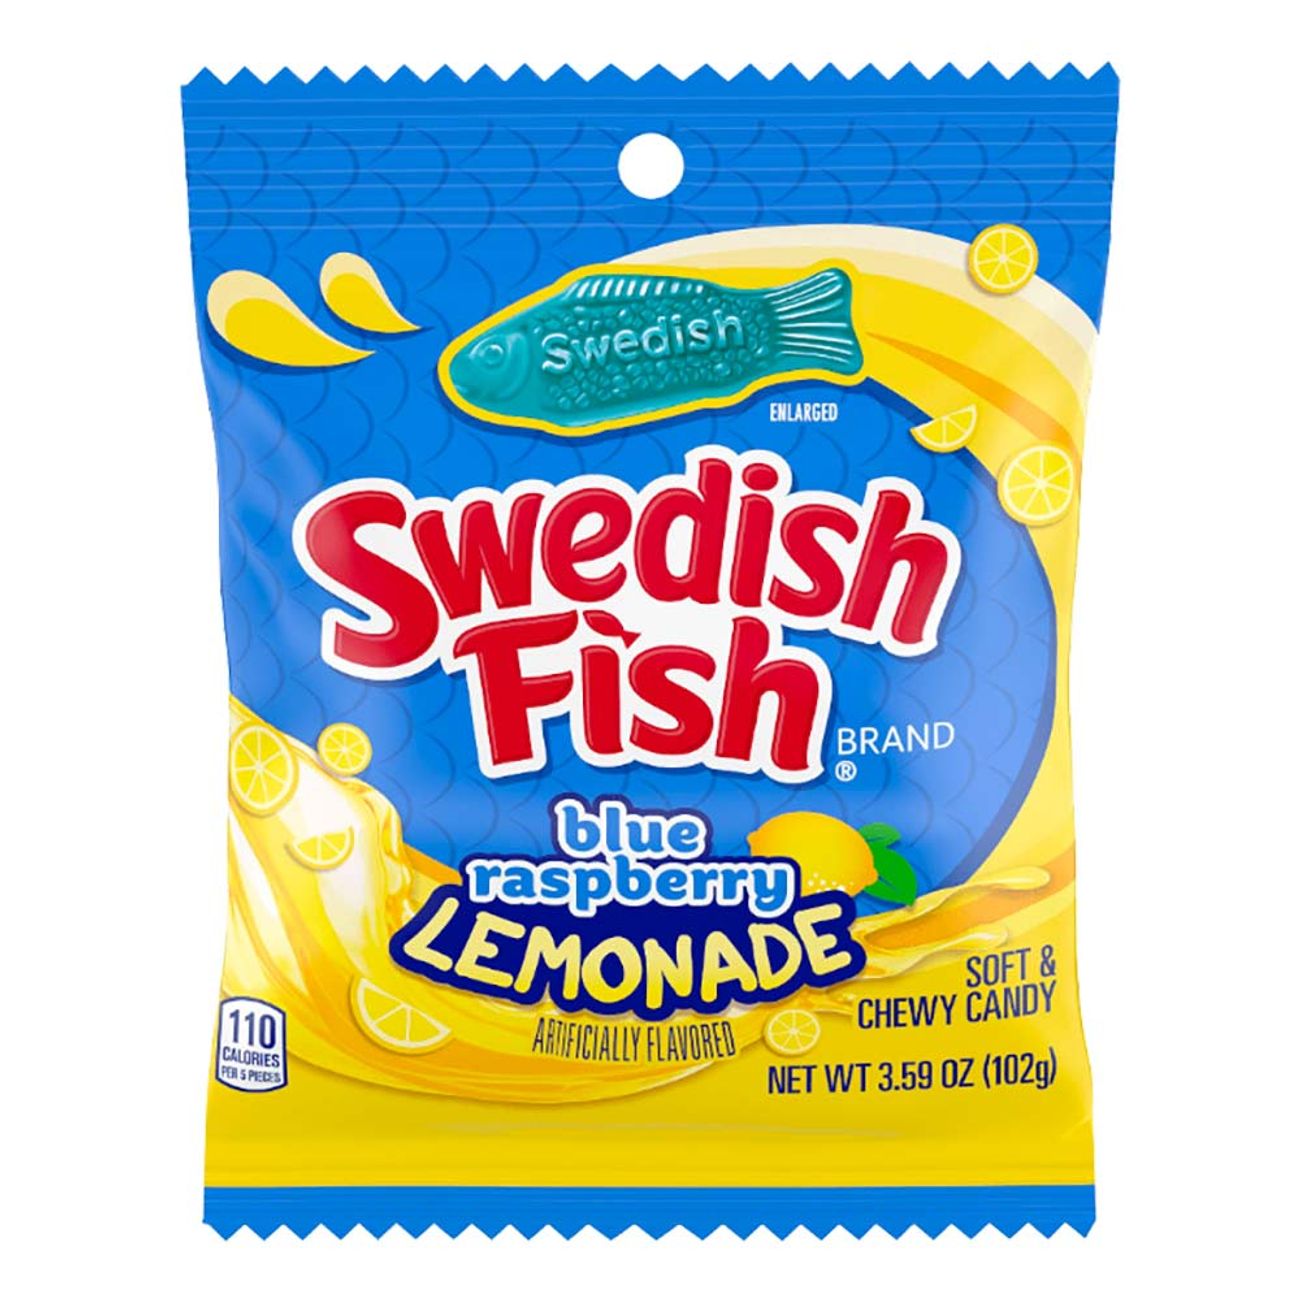 swedish-fish-blue-raspberry-lemonade-95101-1